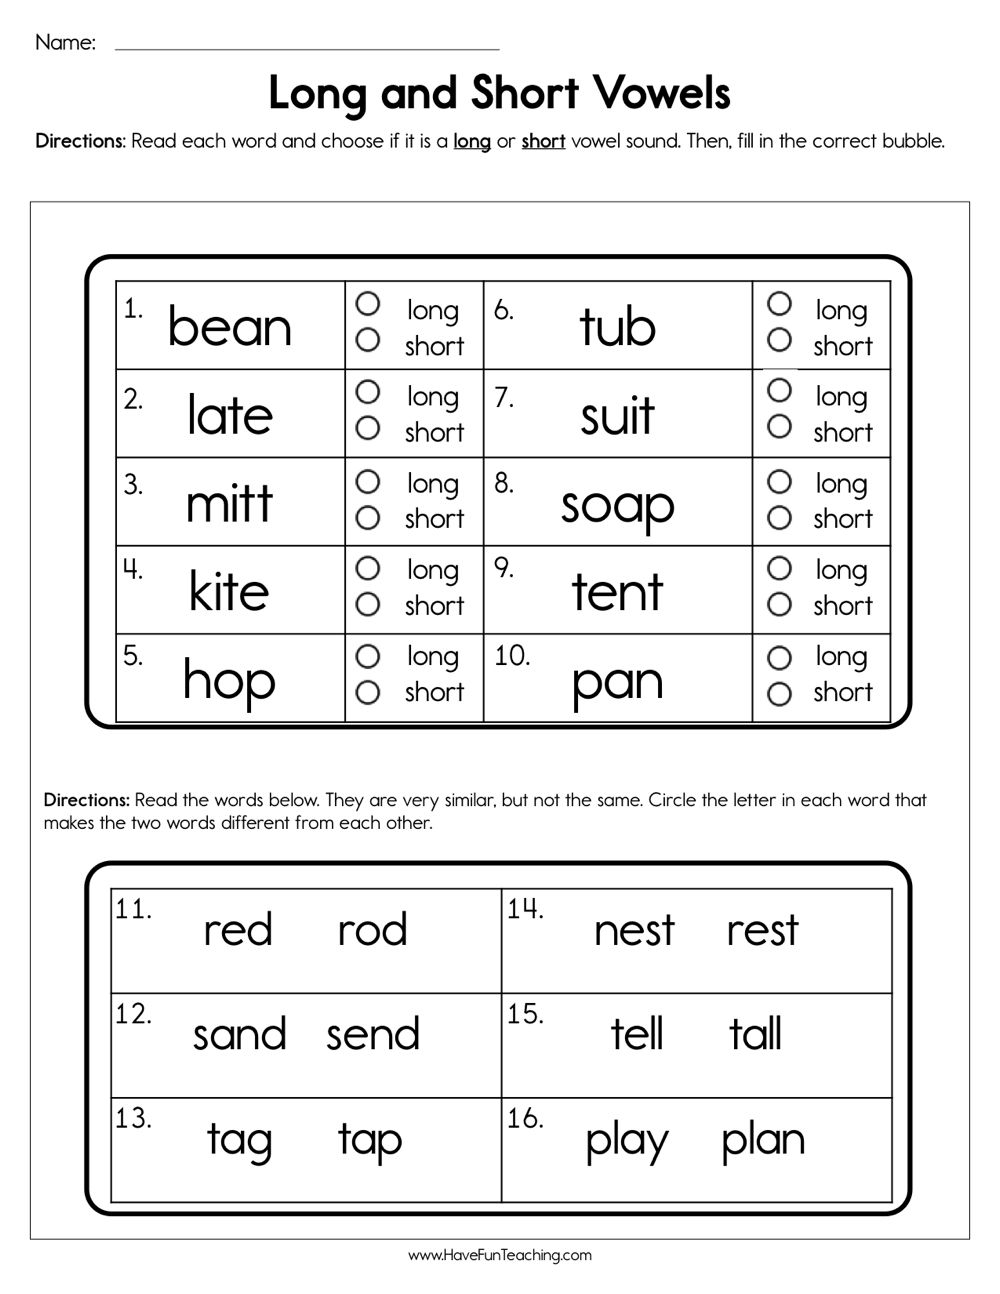 Long and Short Vowel E Spelling Worksheet: Free Printable for Kids